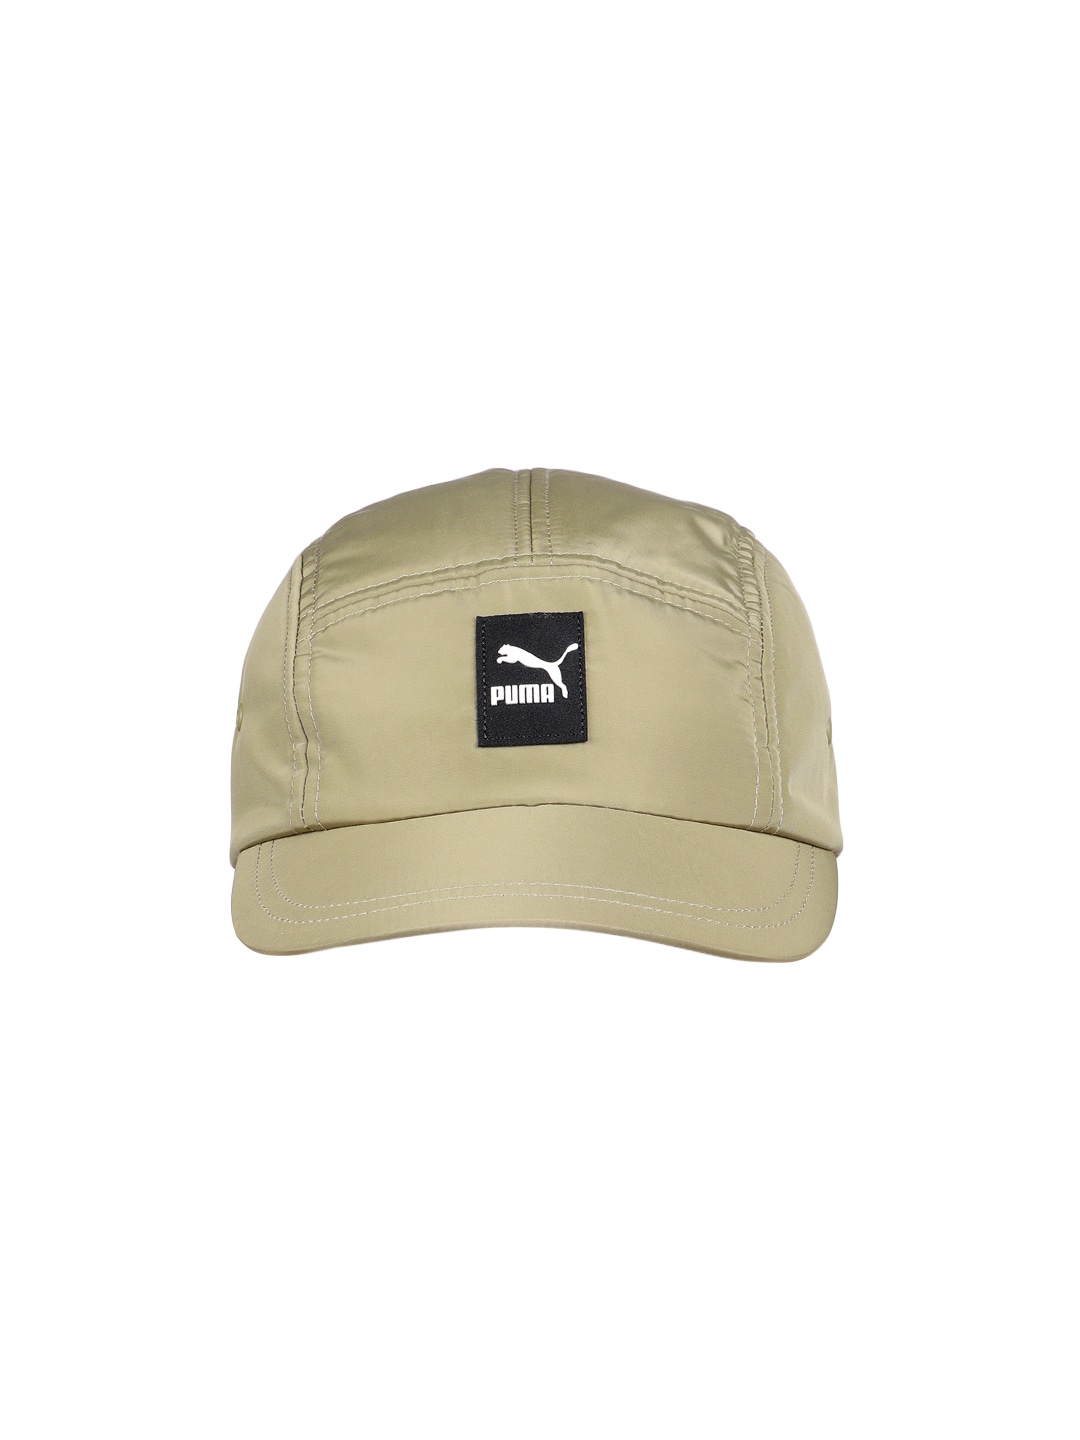 Accessories Caps | Puma Unisex Green Baseball Cap - DO16592